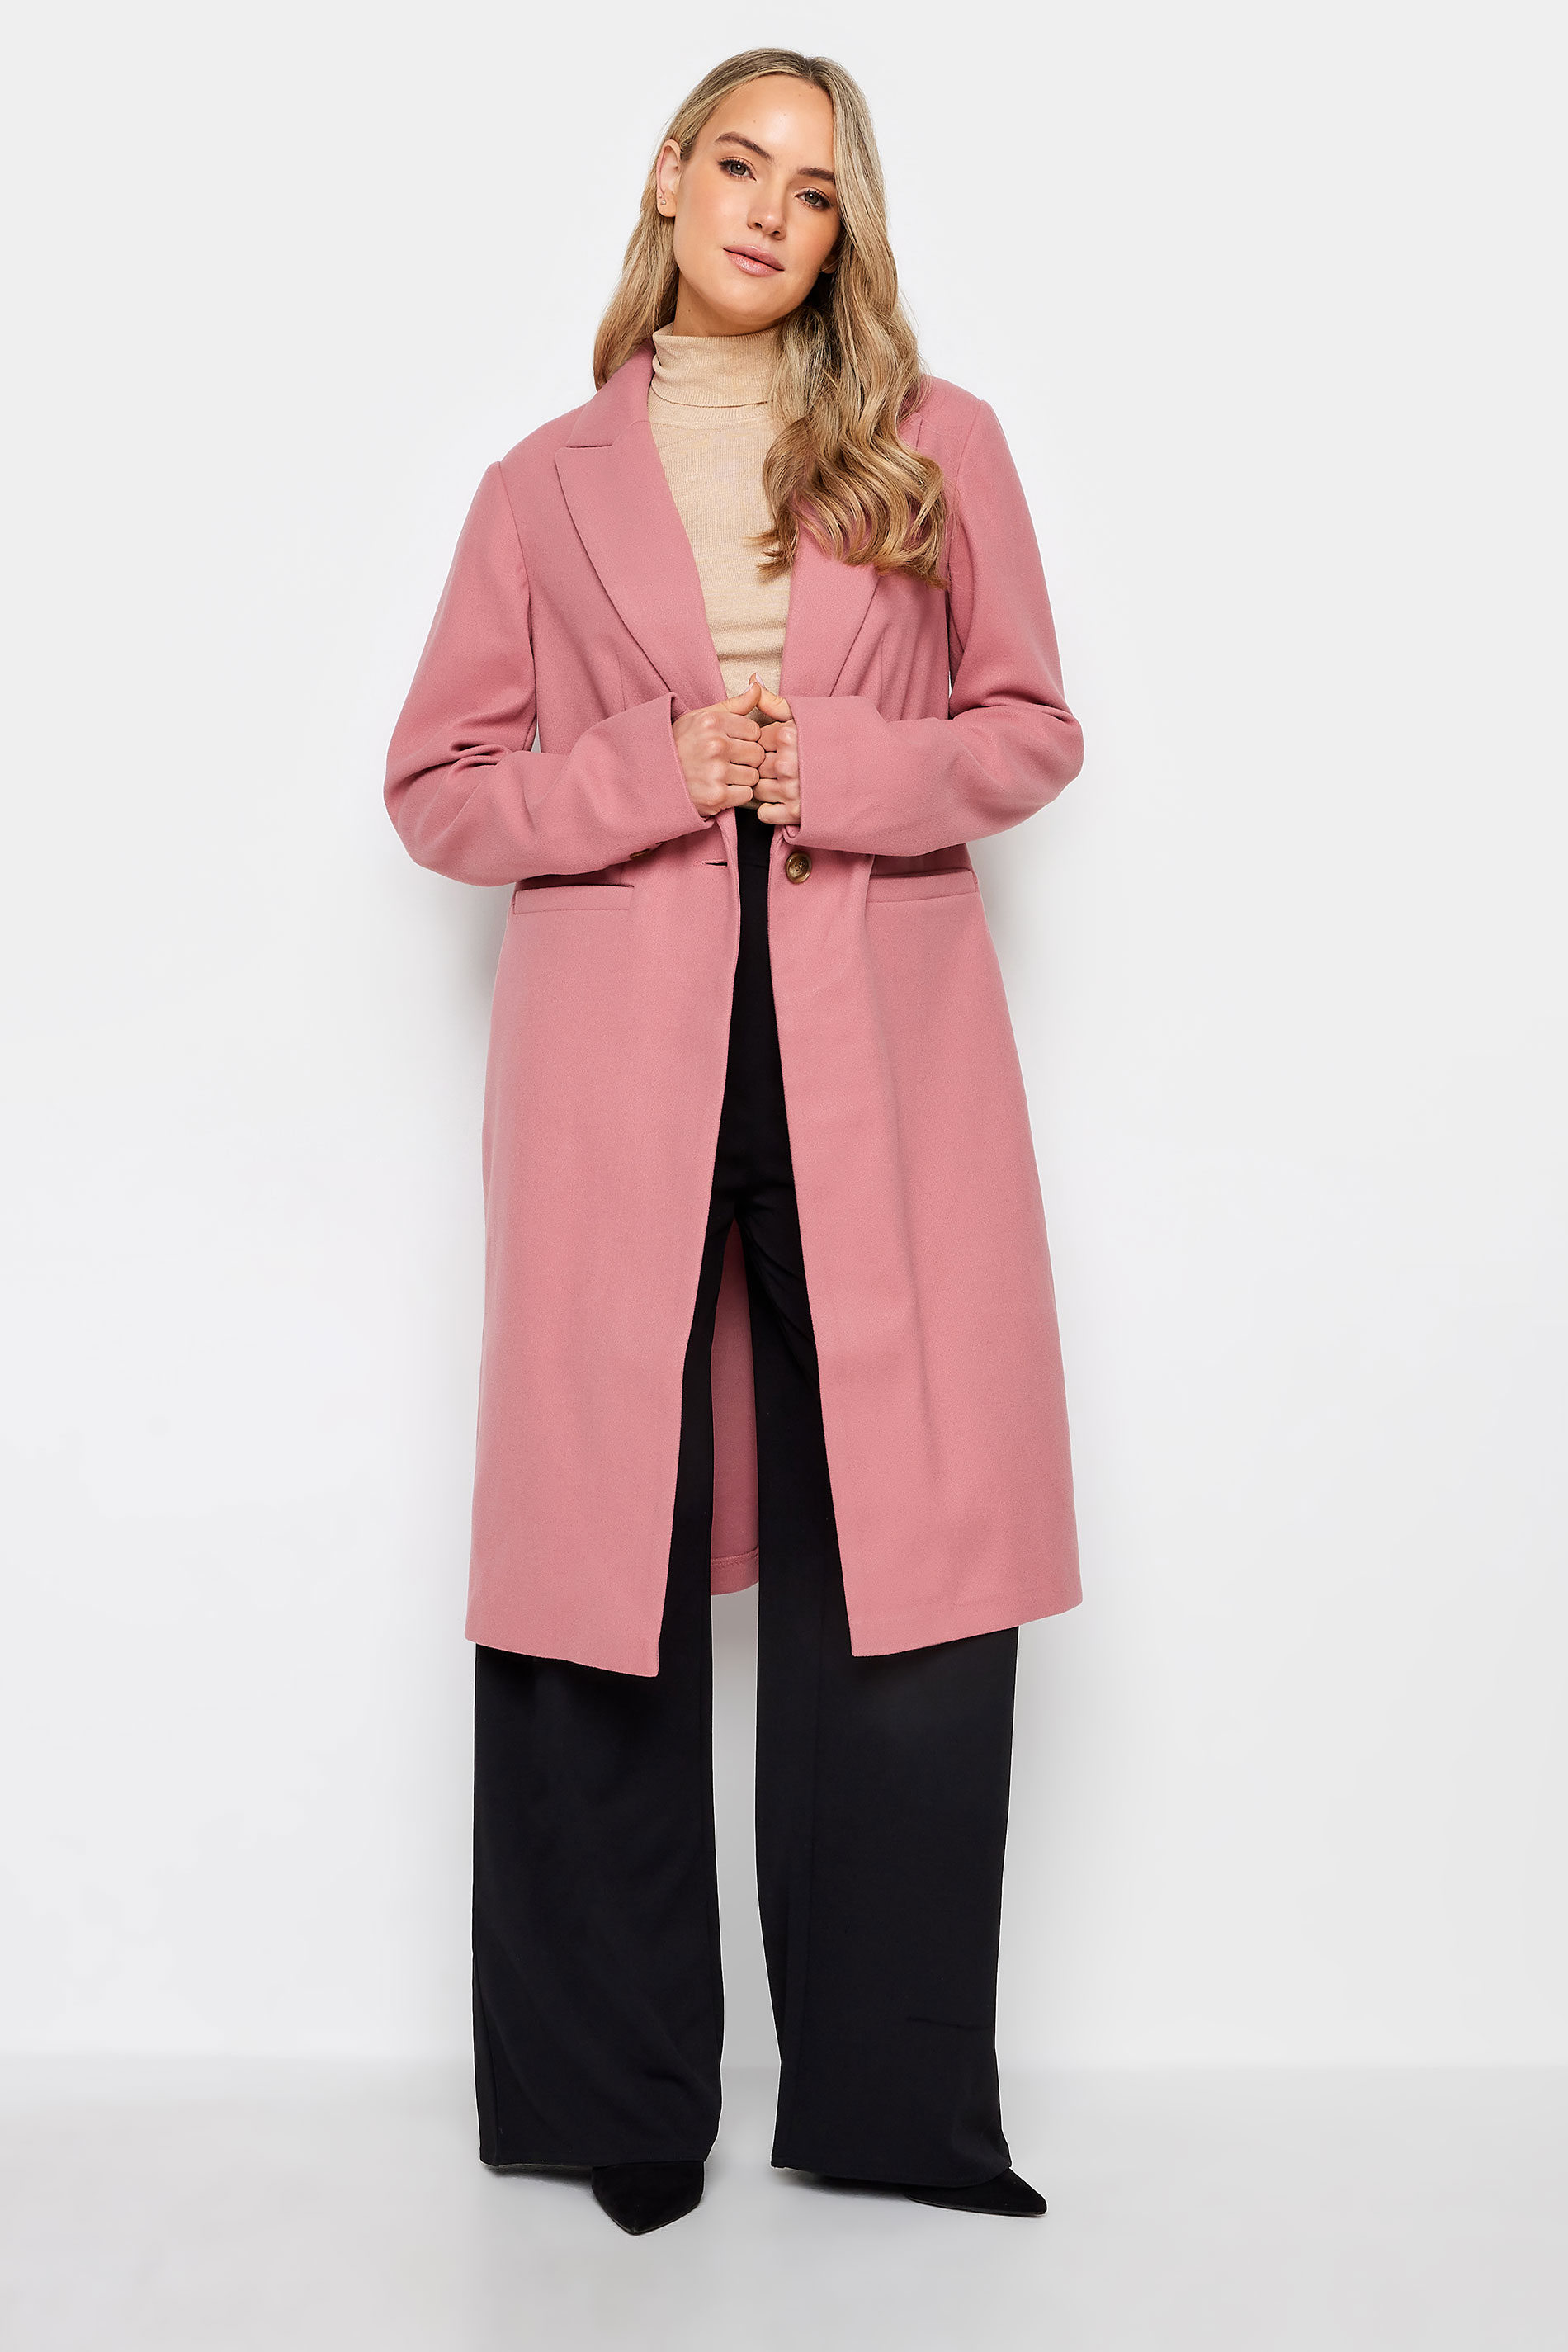 LTS Tall Women's Blush Pink Midi Formal Coat | Long Tall Sally 1